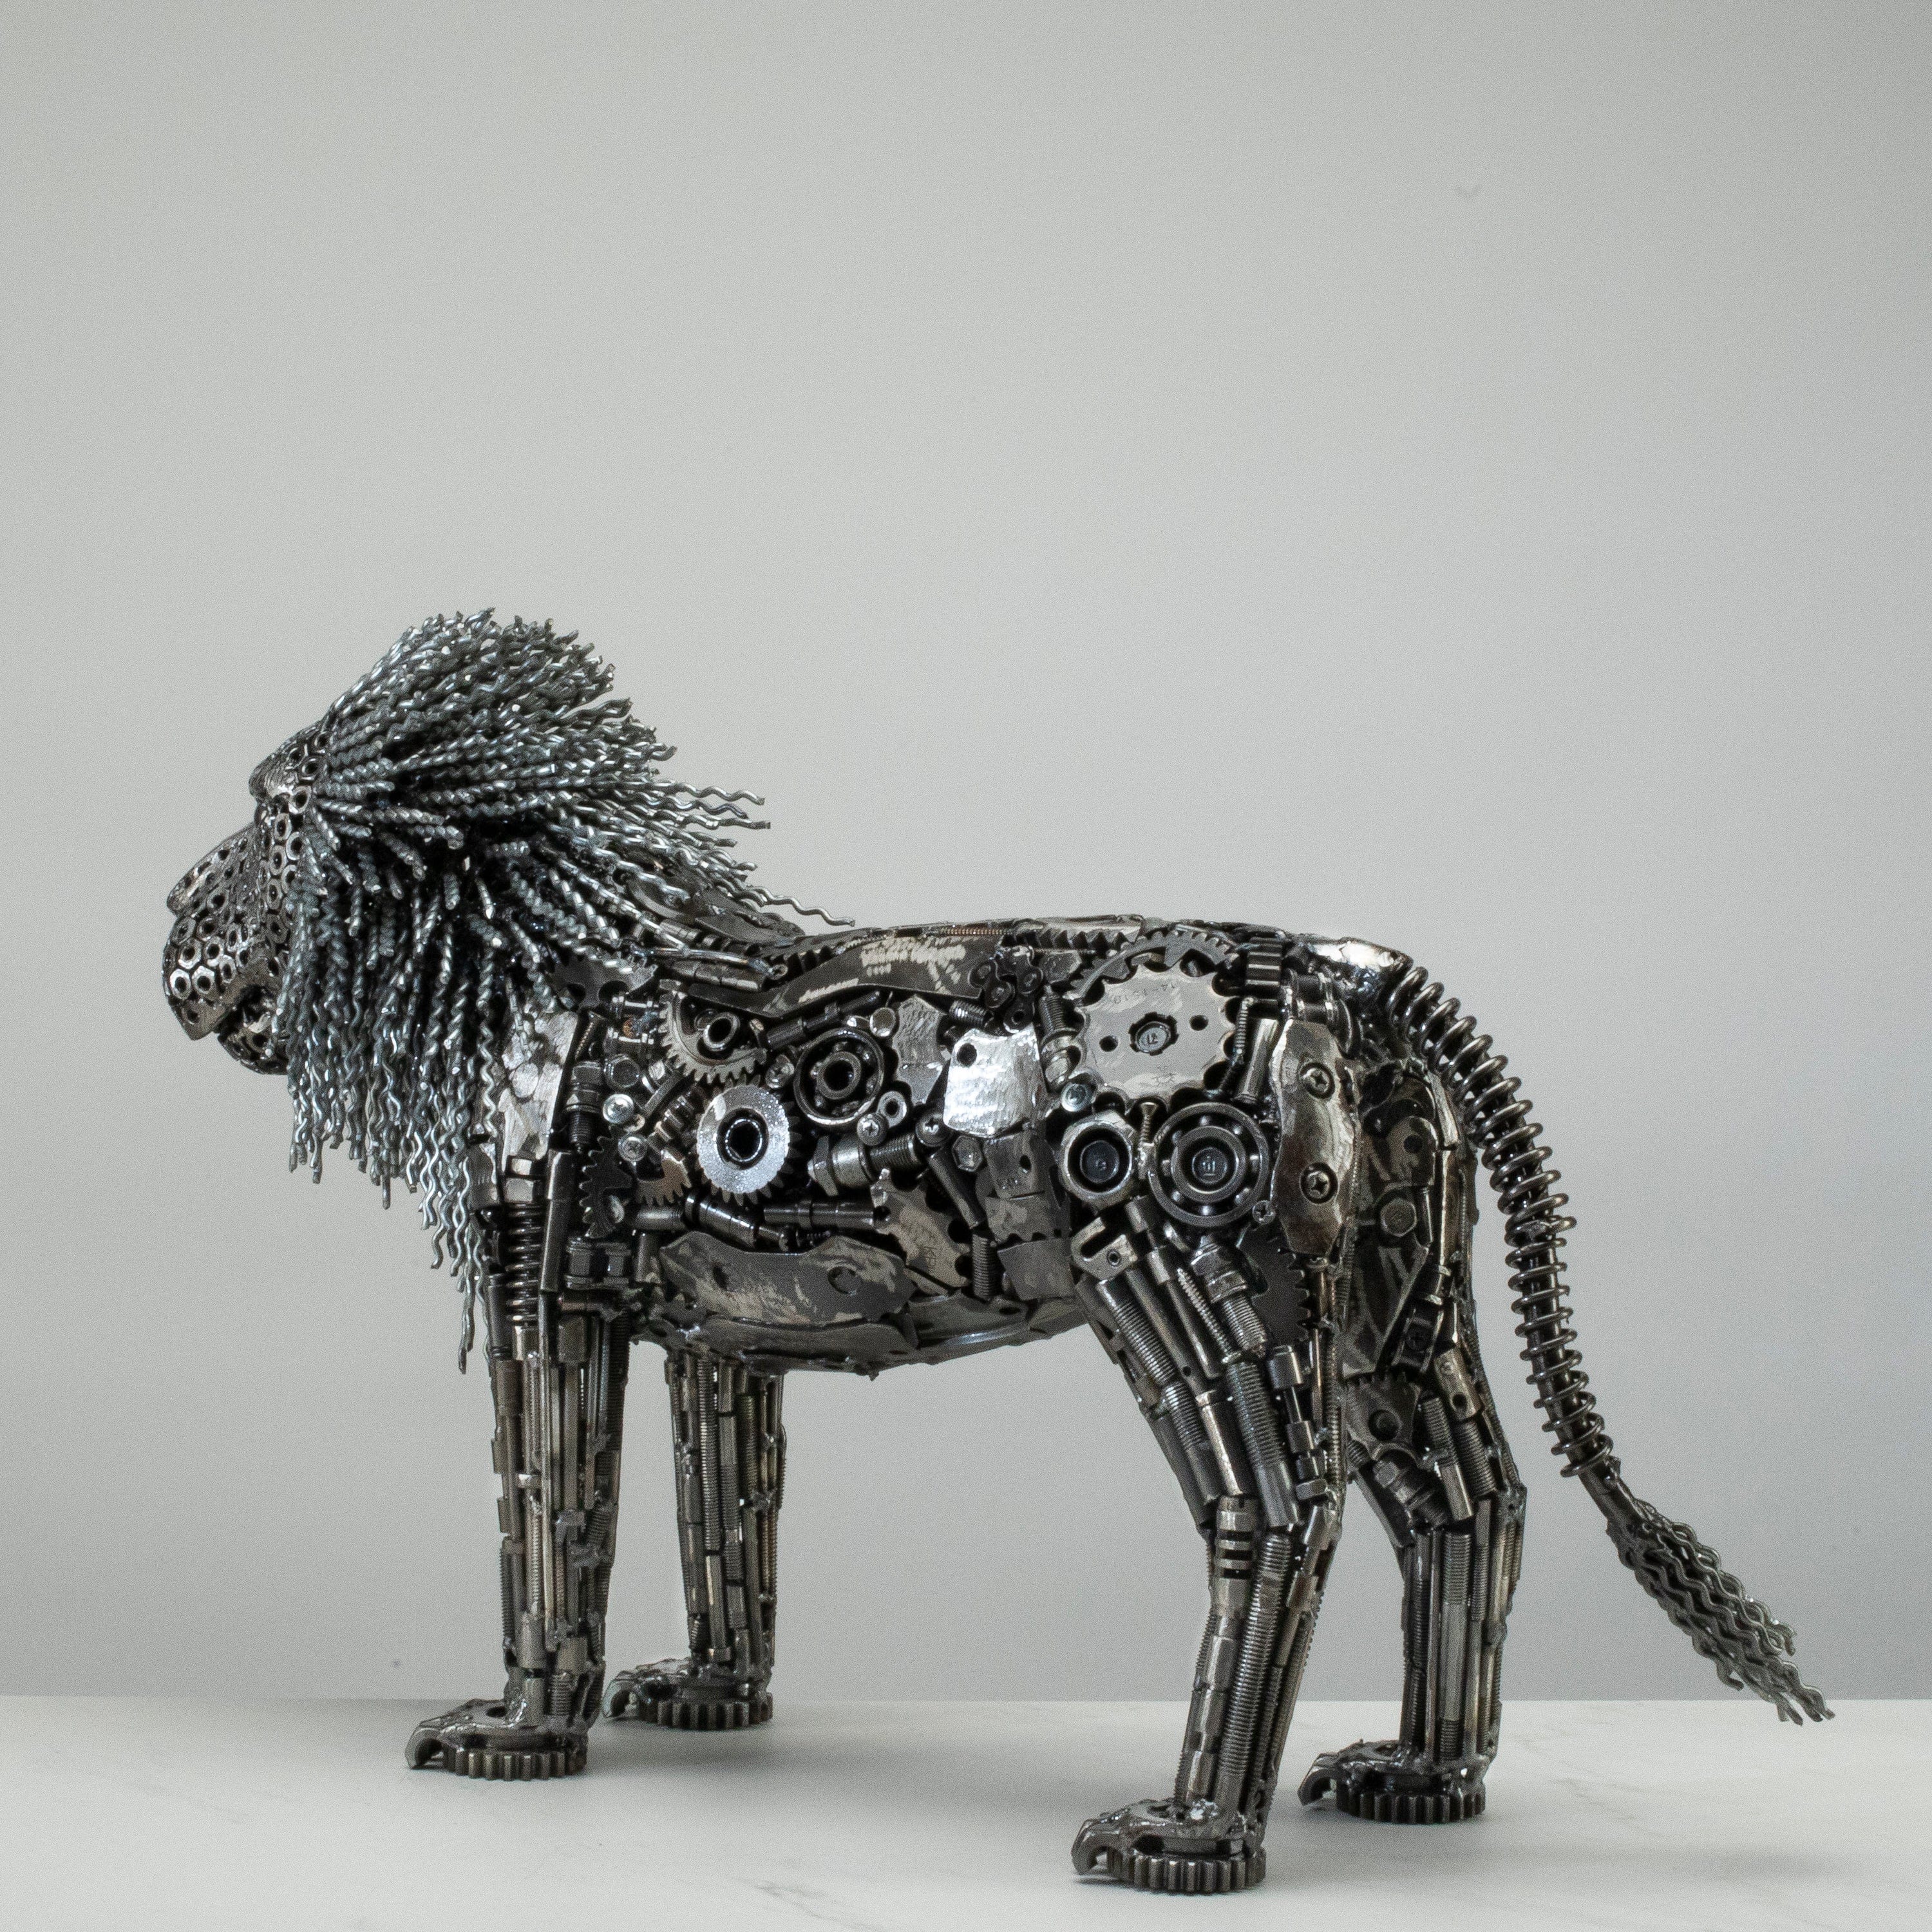 KALIFANO Recycled Metal Art 24" Lion Recycled Metal Art Sculpture RMS-LION60x42-PK